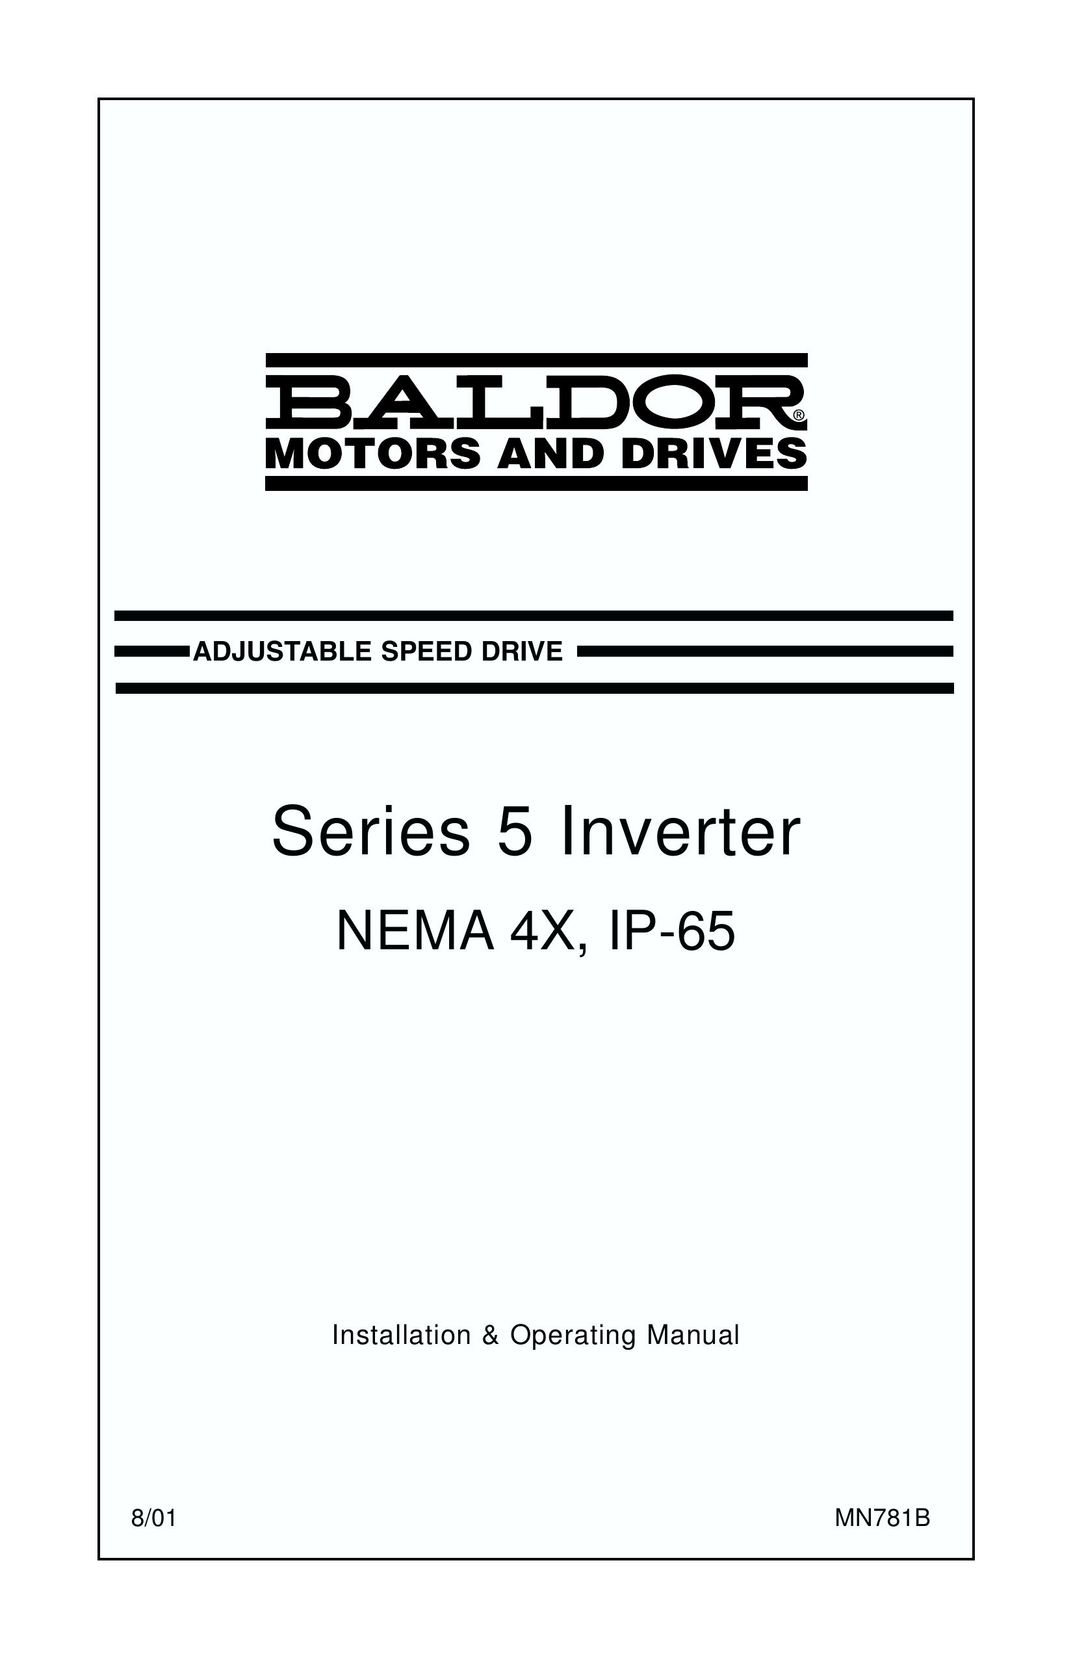 Baldor IP-65 Power Supply User Manual